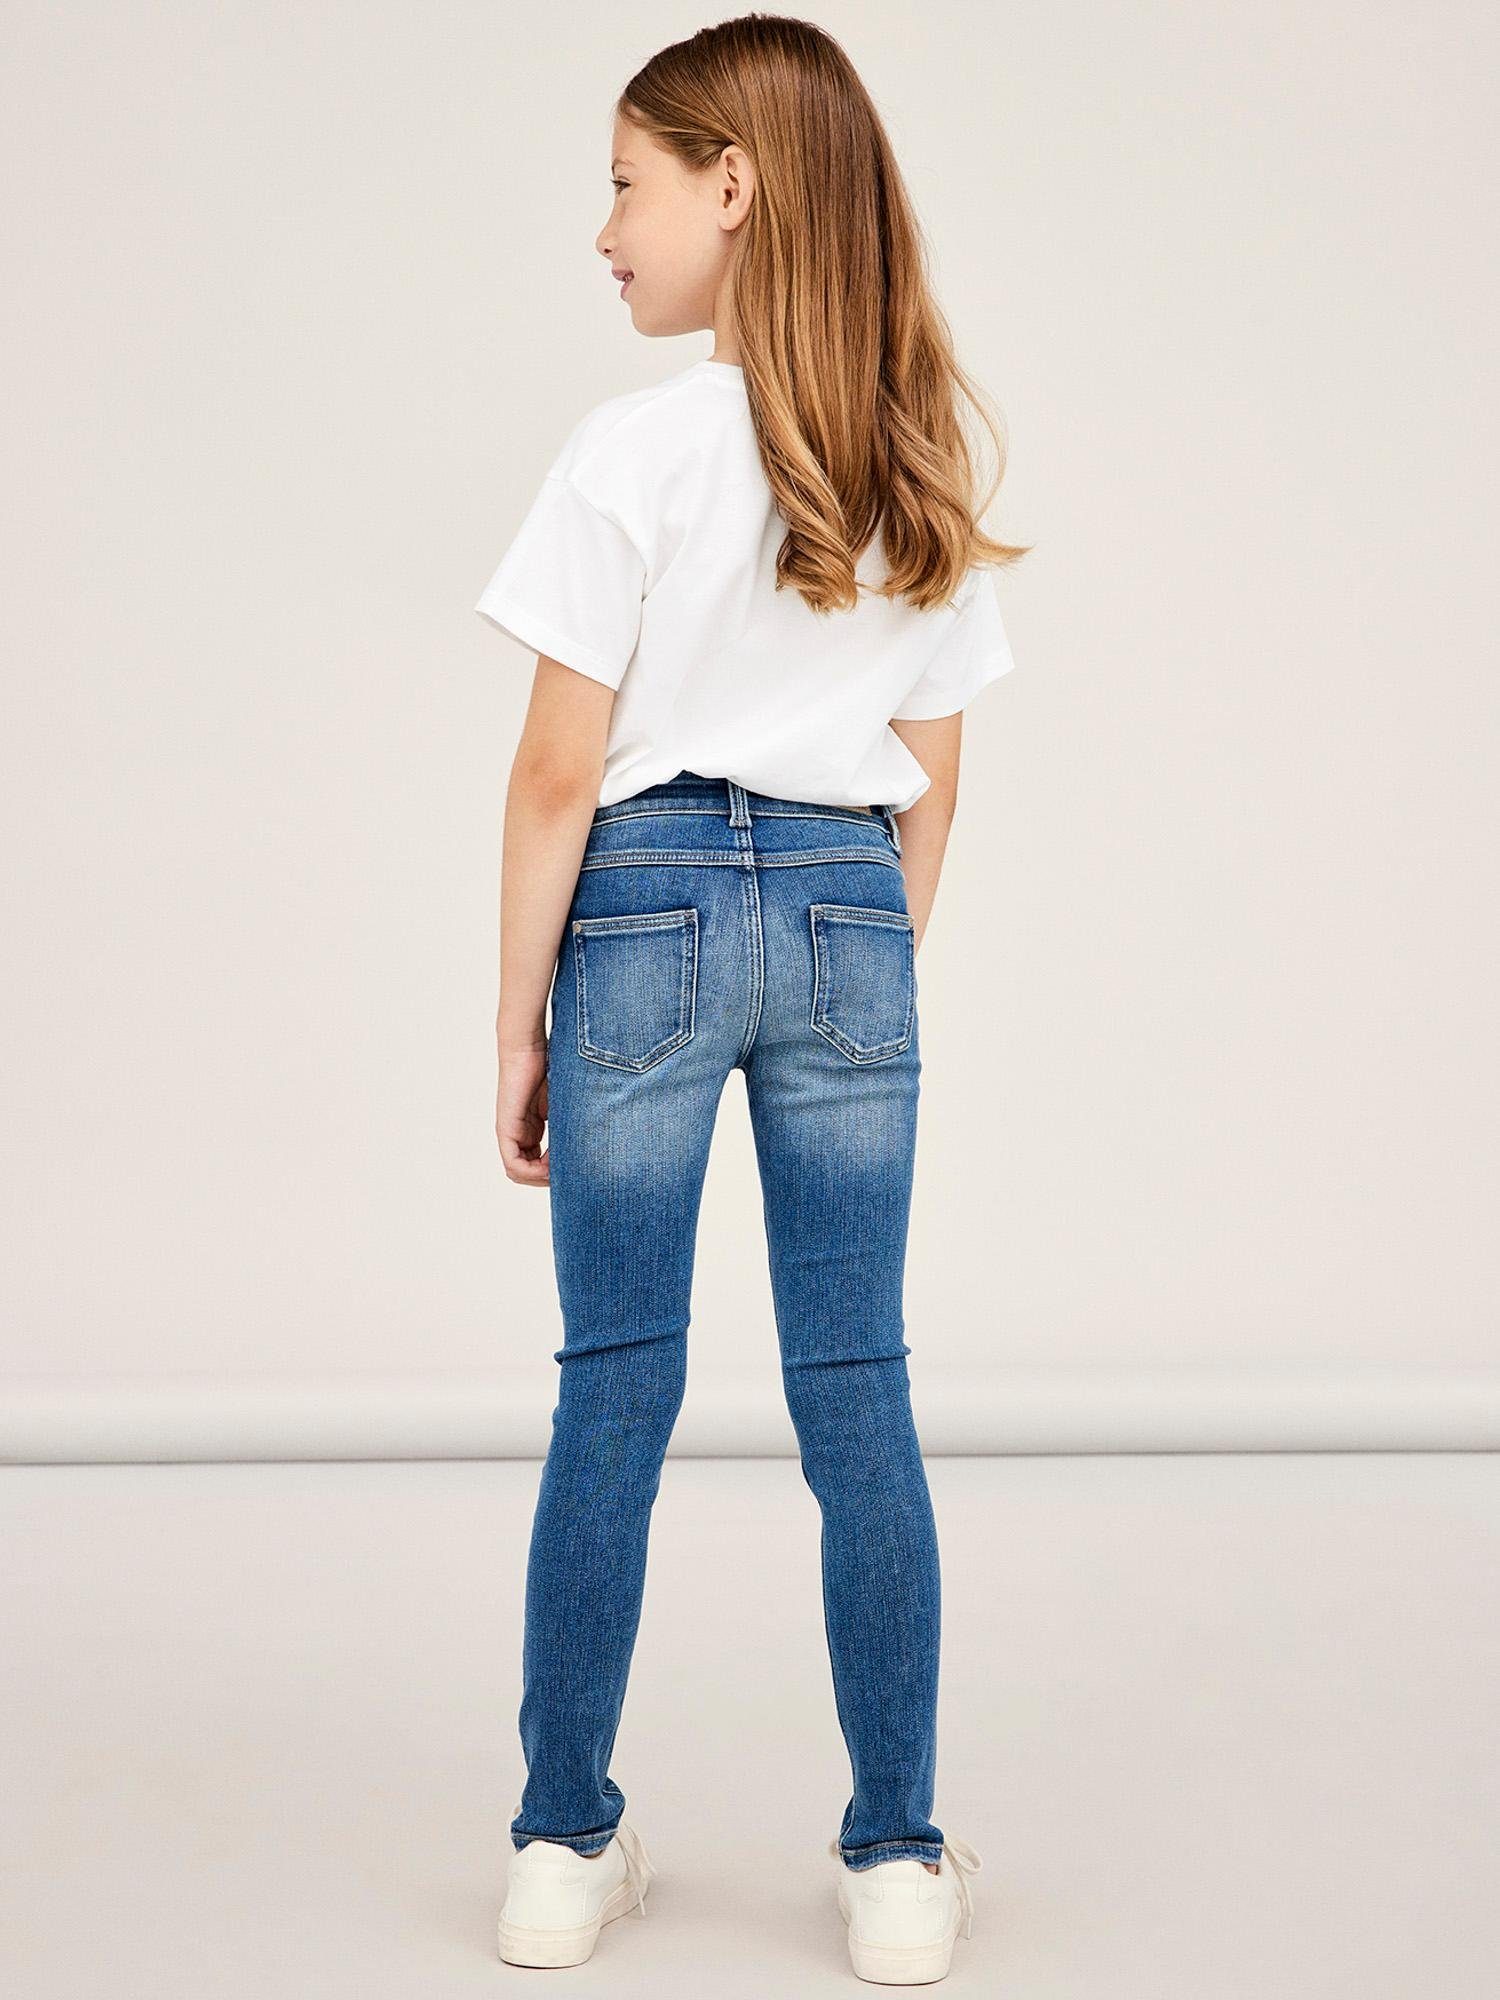 It NKFPOLLY 2602 Slim-fit-Jeans DNMTAGIS Name PANT